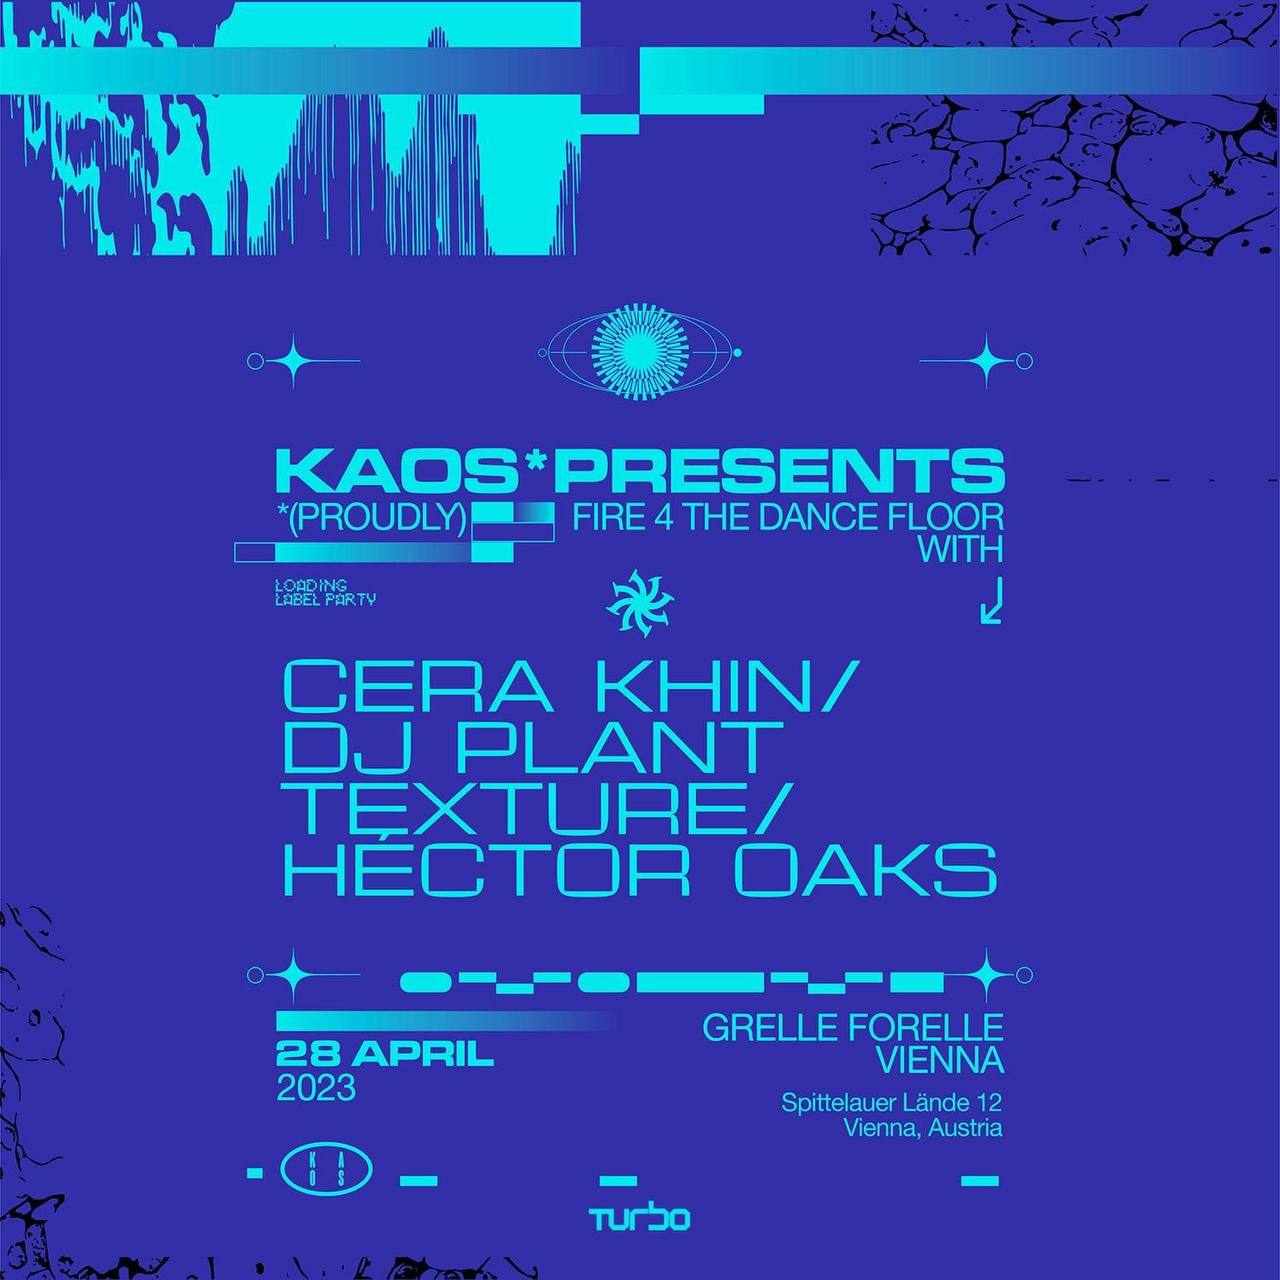 Hector Oaks, Cera Khin, DJ Plant Texture | KAOS am 28. April 2023 @ Grelle Forelle.